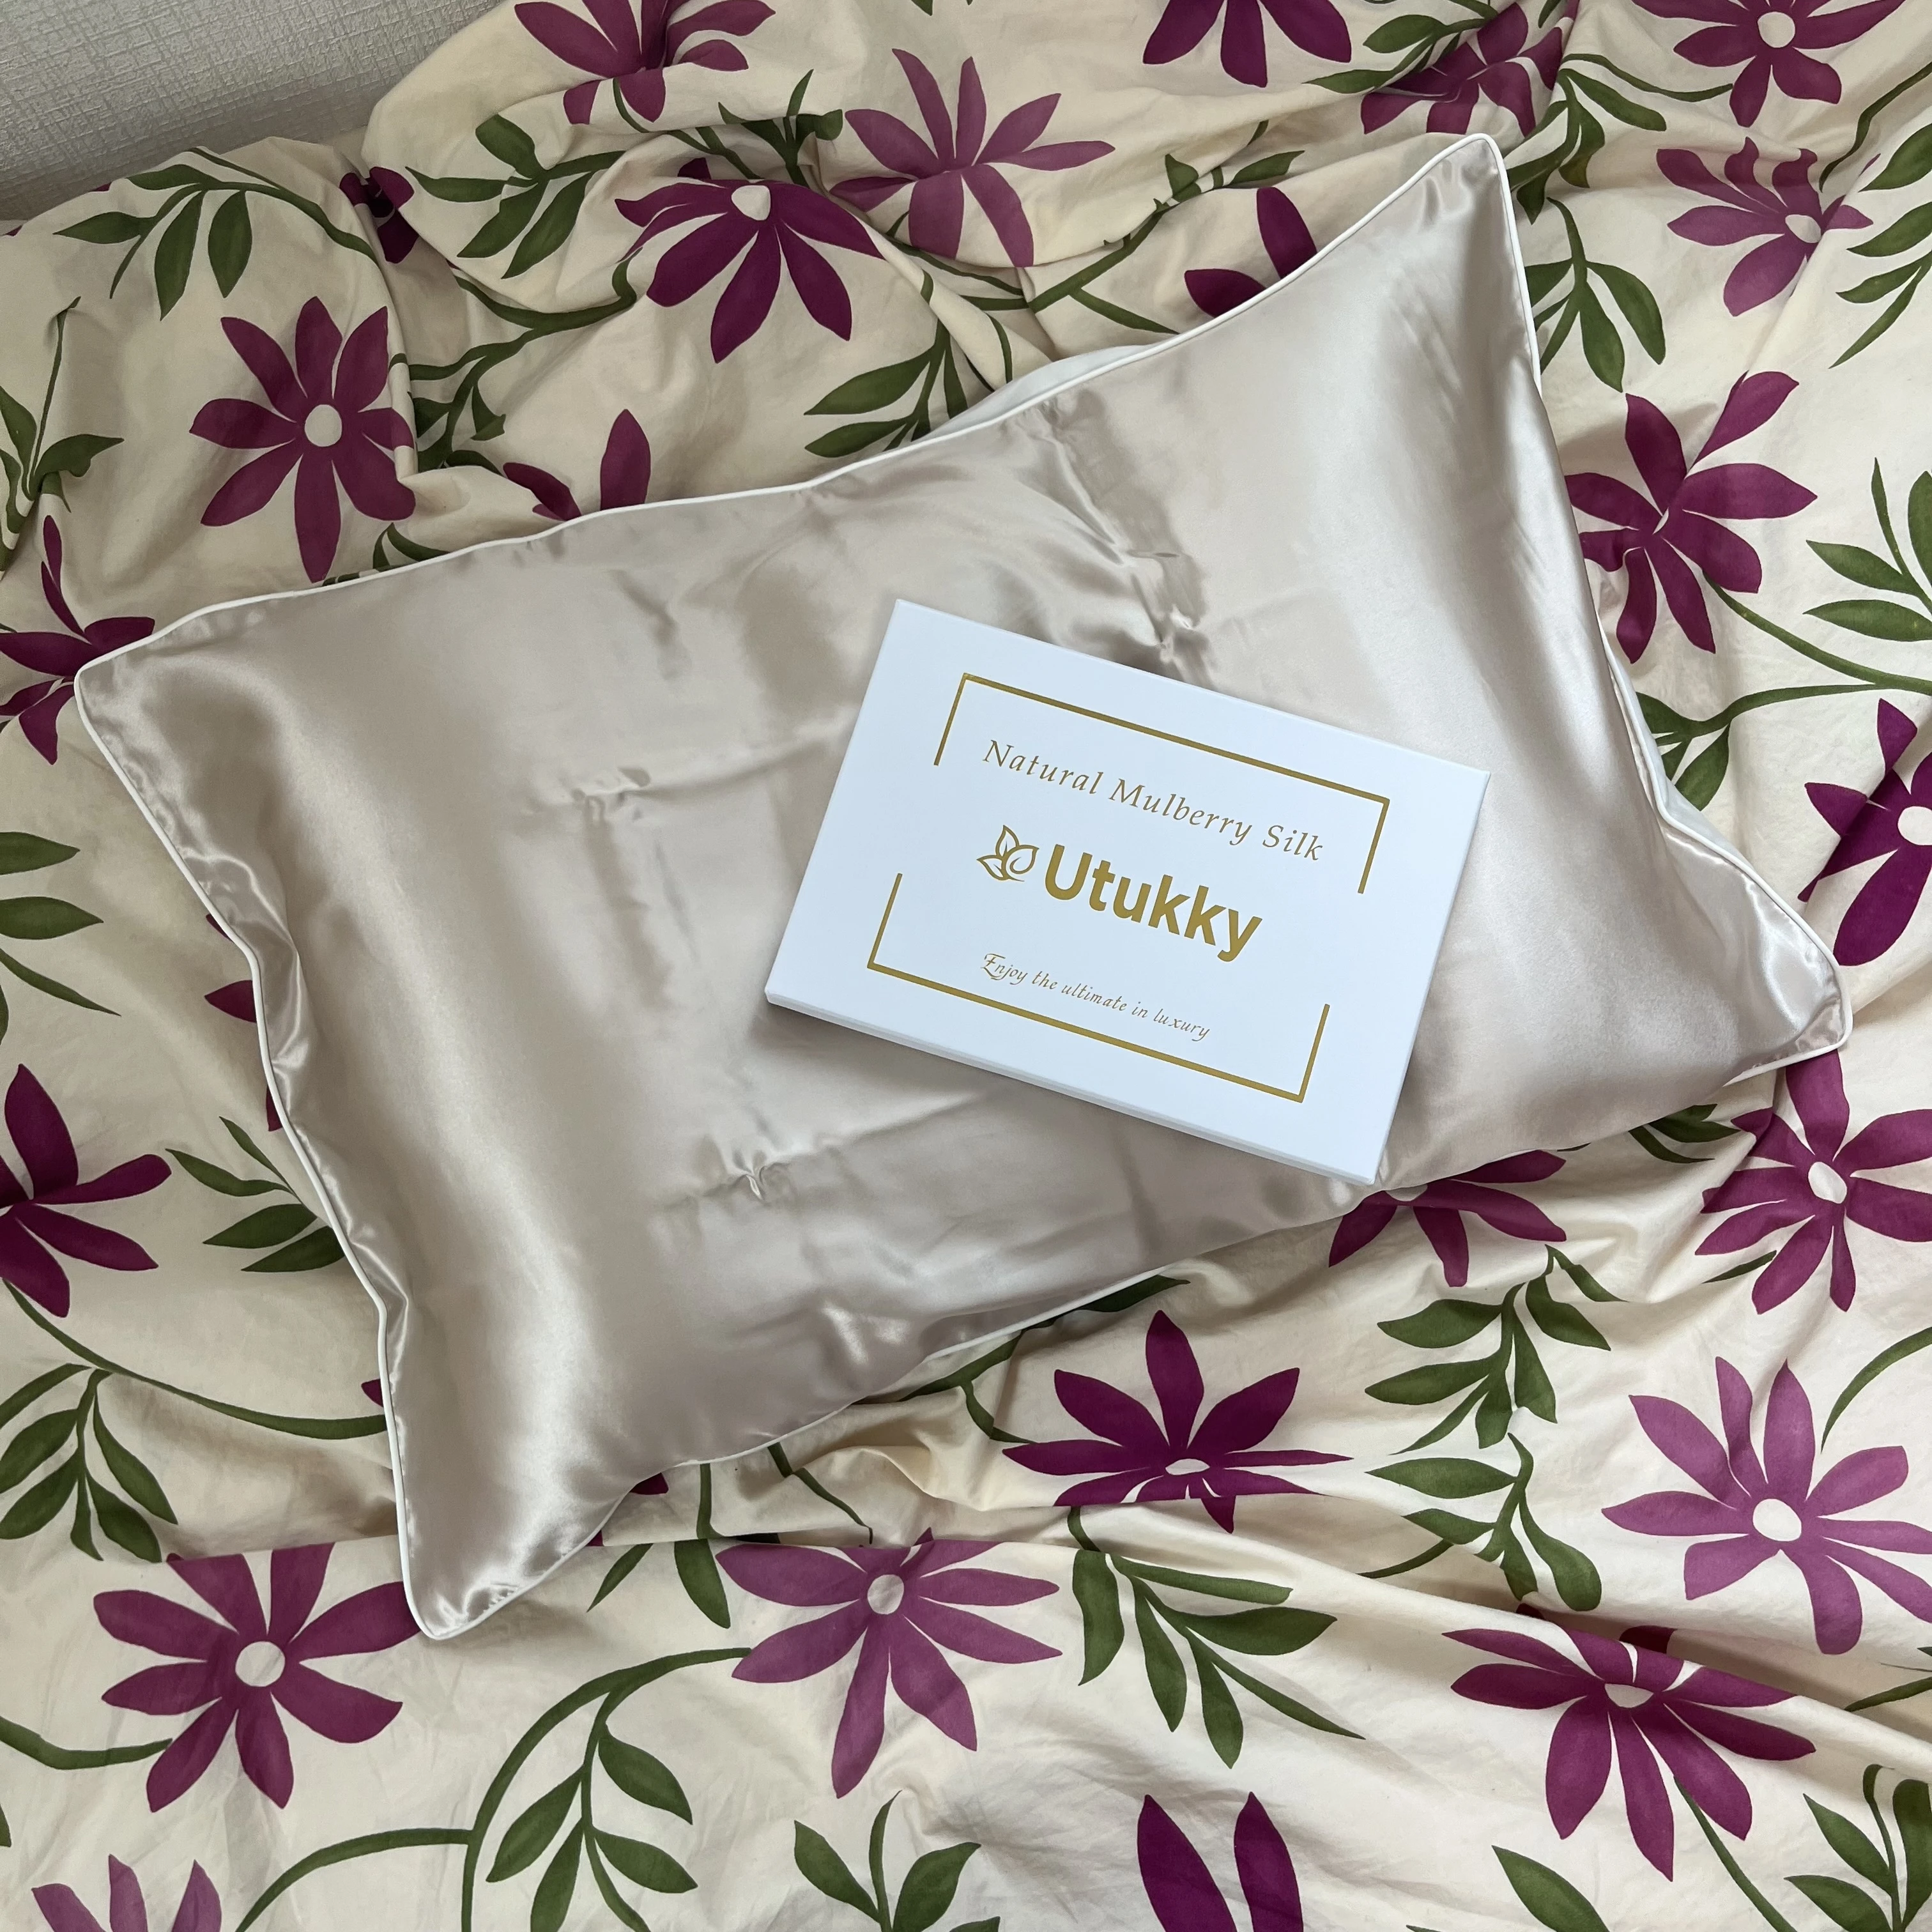 Utukky シルク枕カバー価格:¥3780/サイズ:43×63cm /カラー:シャンパン